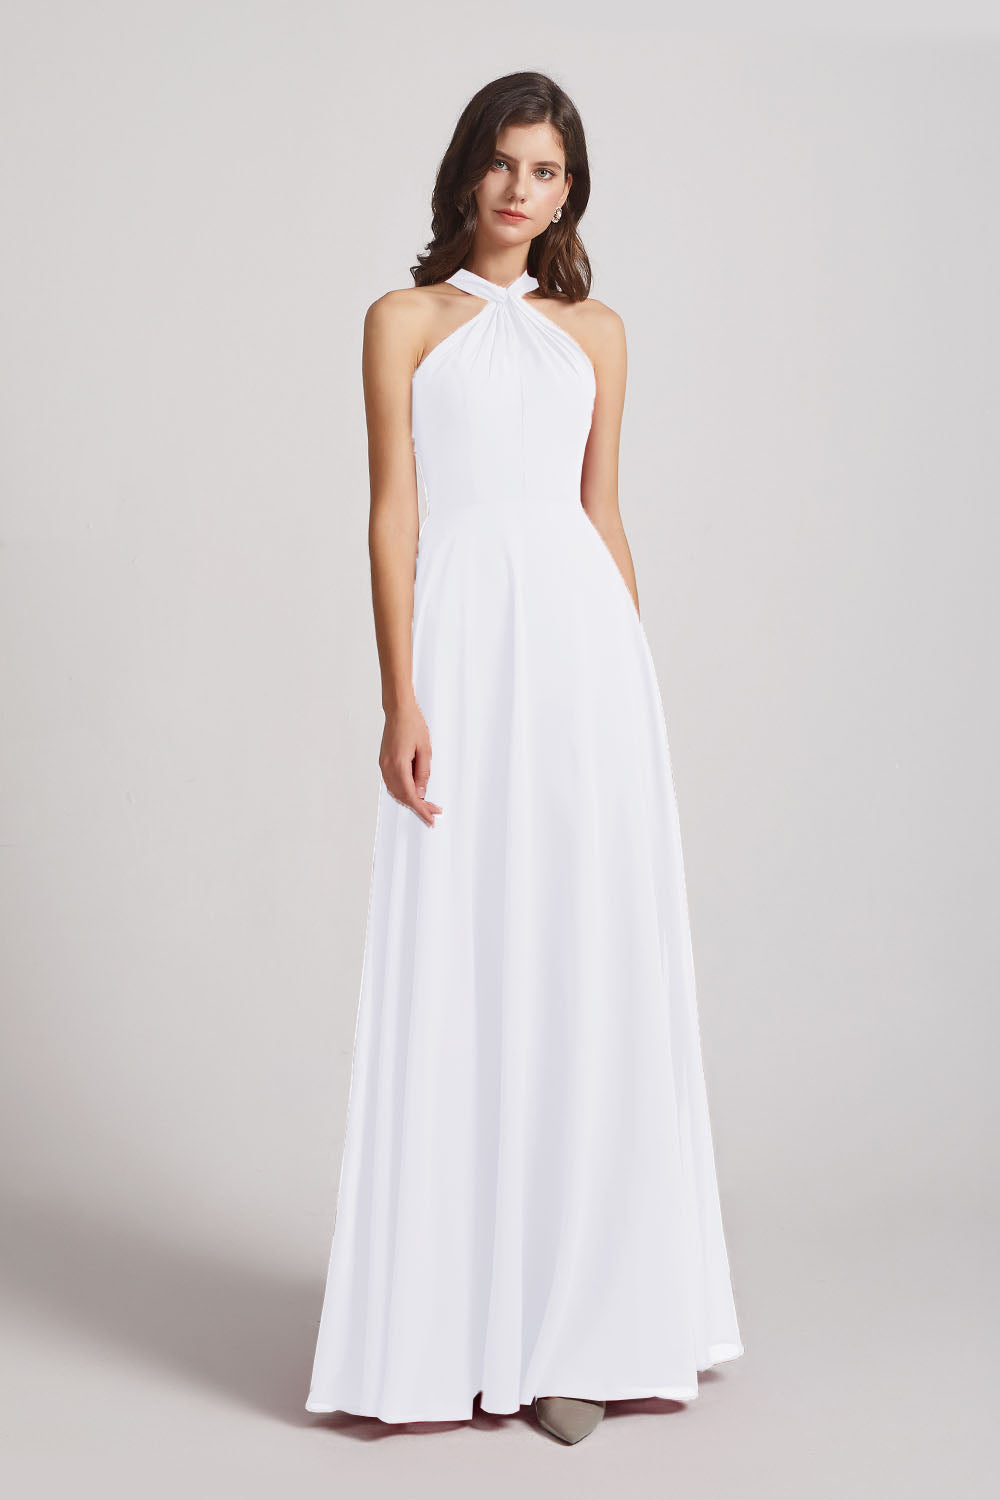 Alfa Bridal White Floor Length Chiffon Bridesmaid Dresses with Criss Cross Neckline (AF0113)